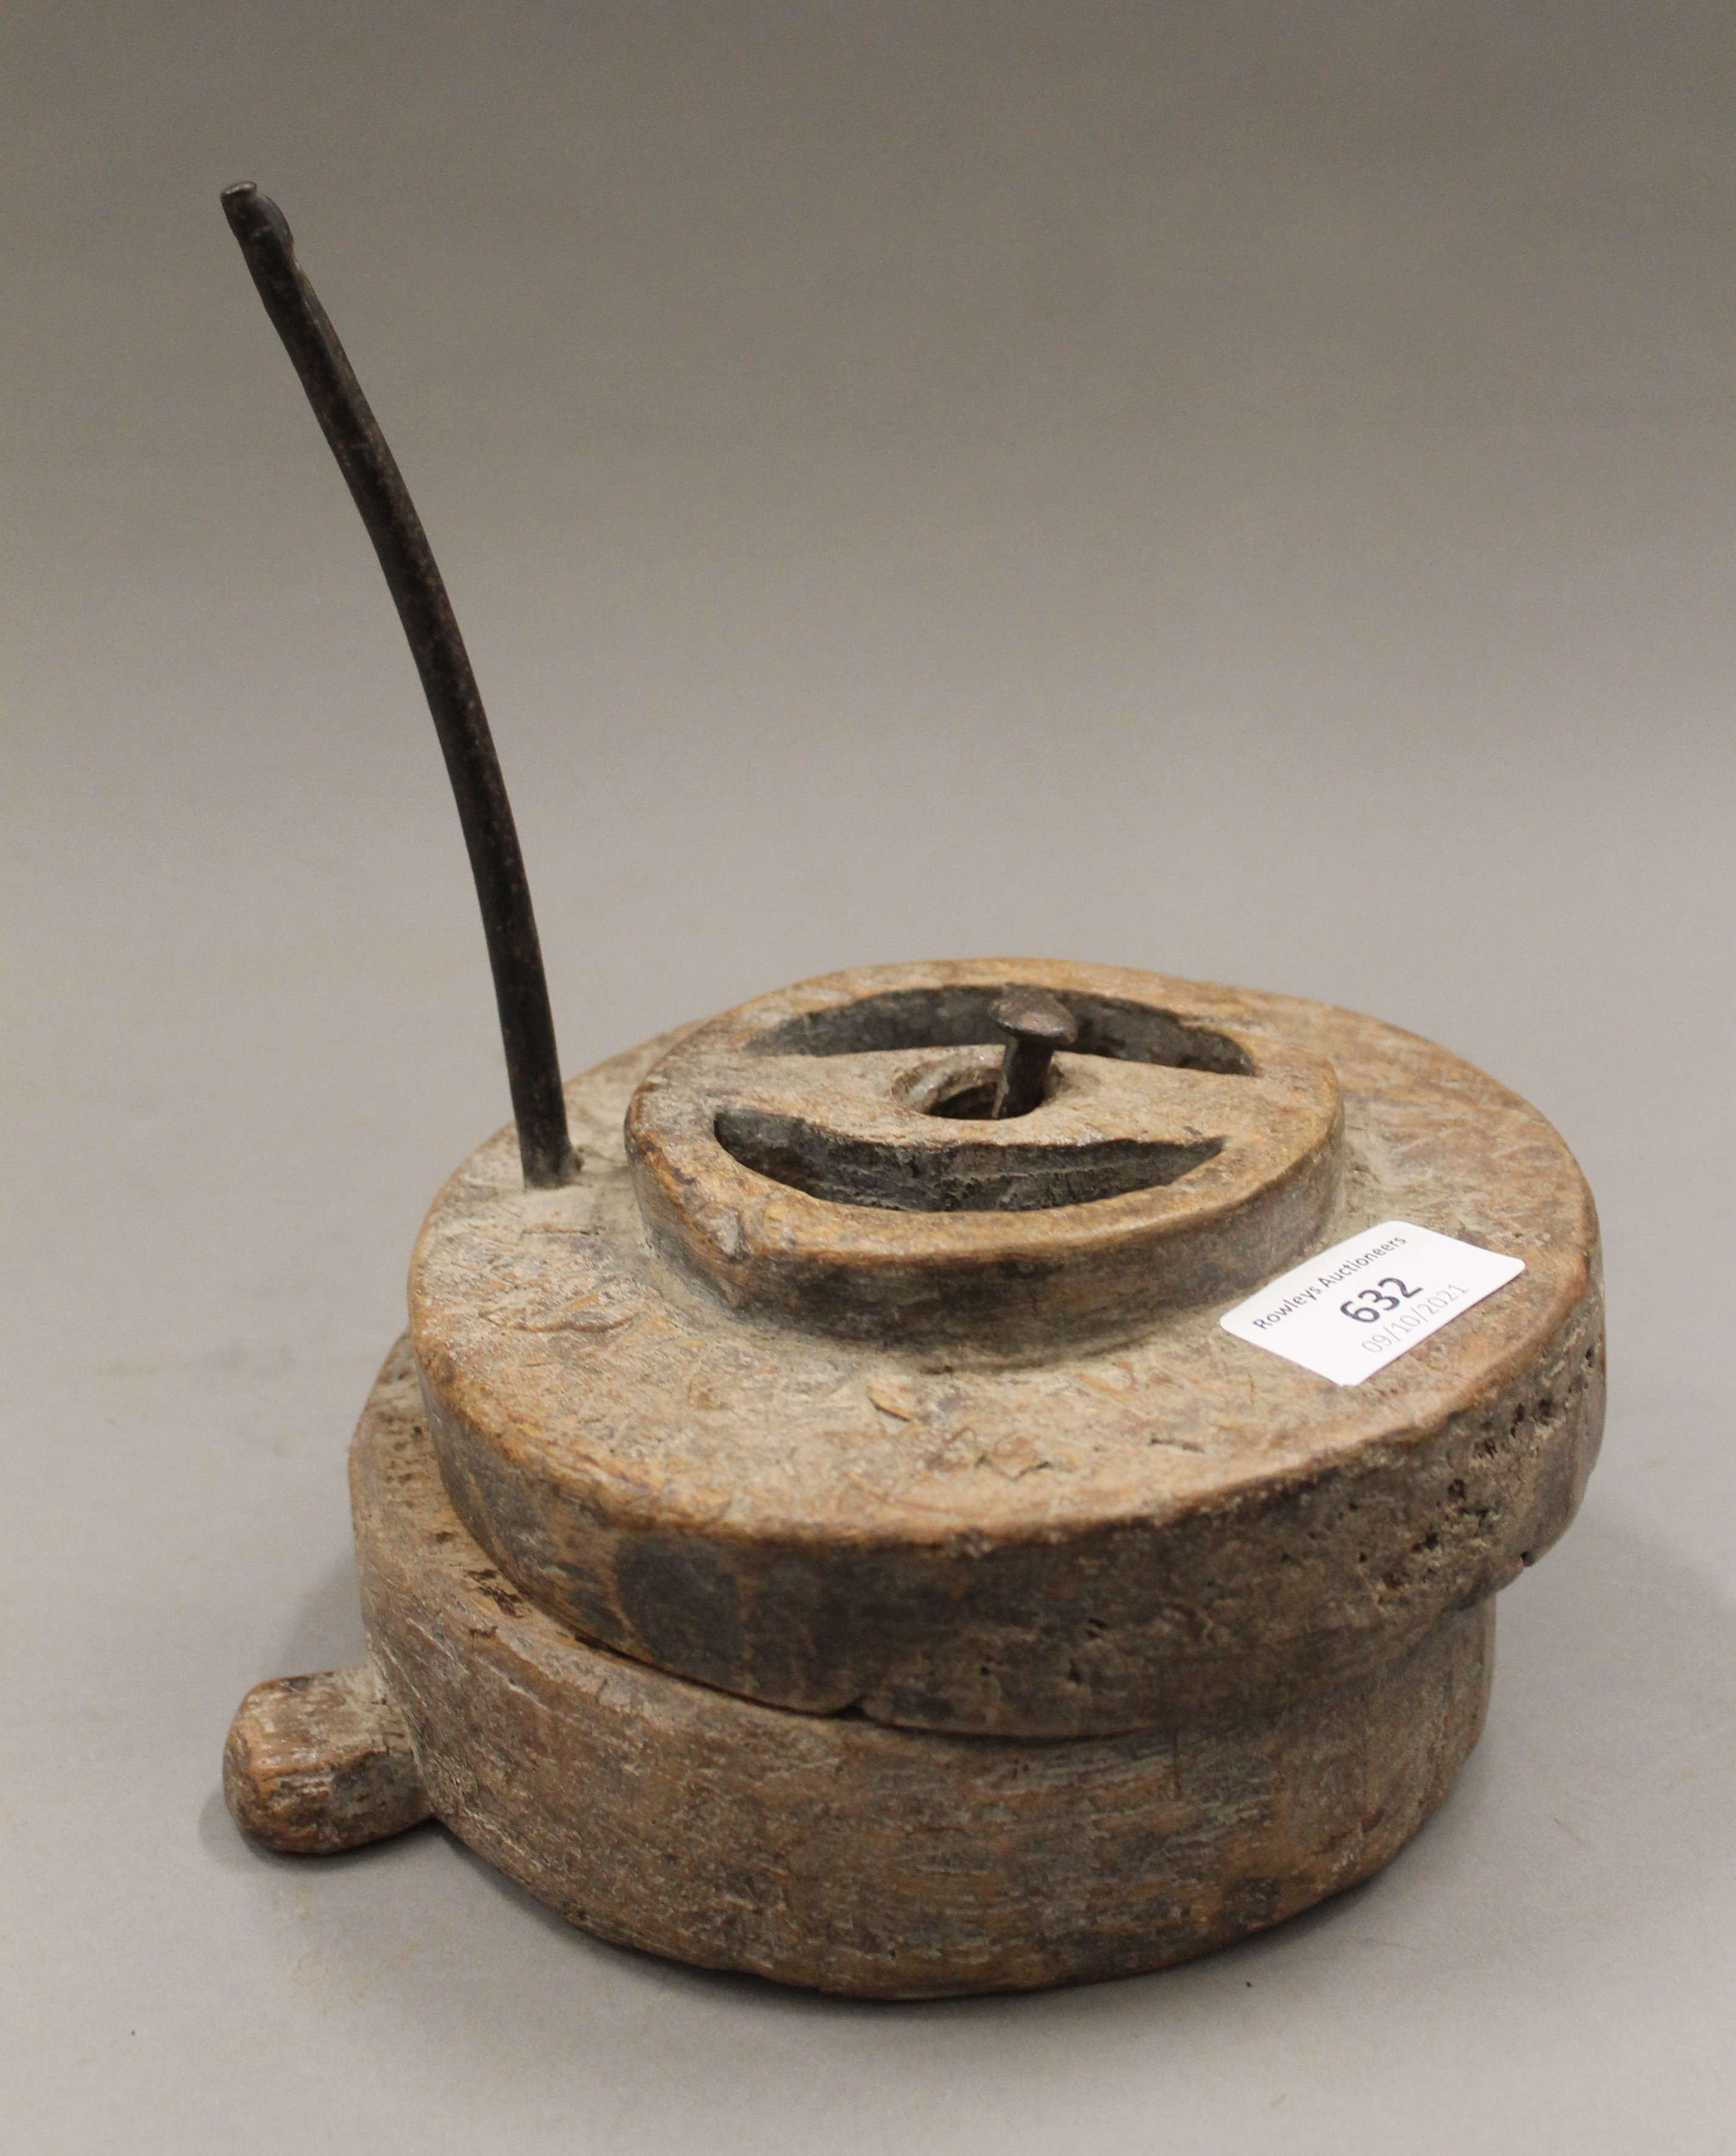 A rustic spice/flour grinder. 21 cm high.